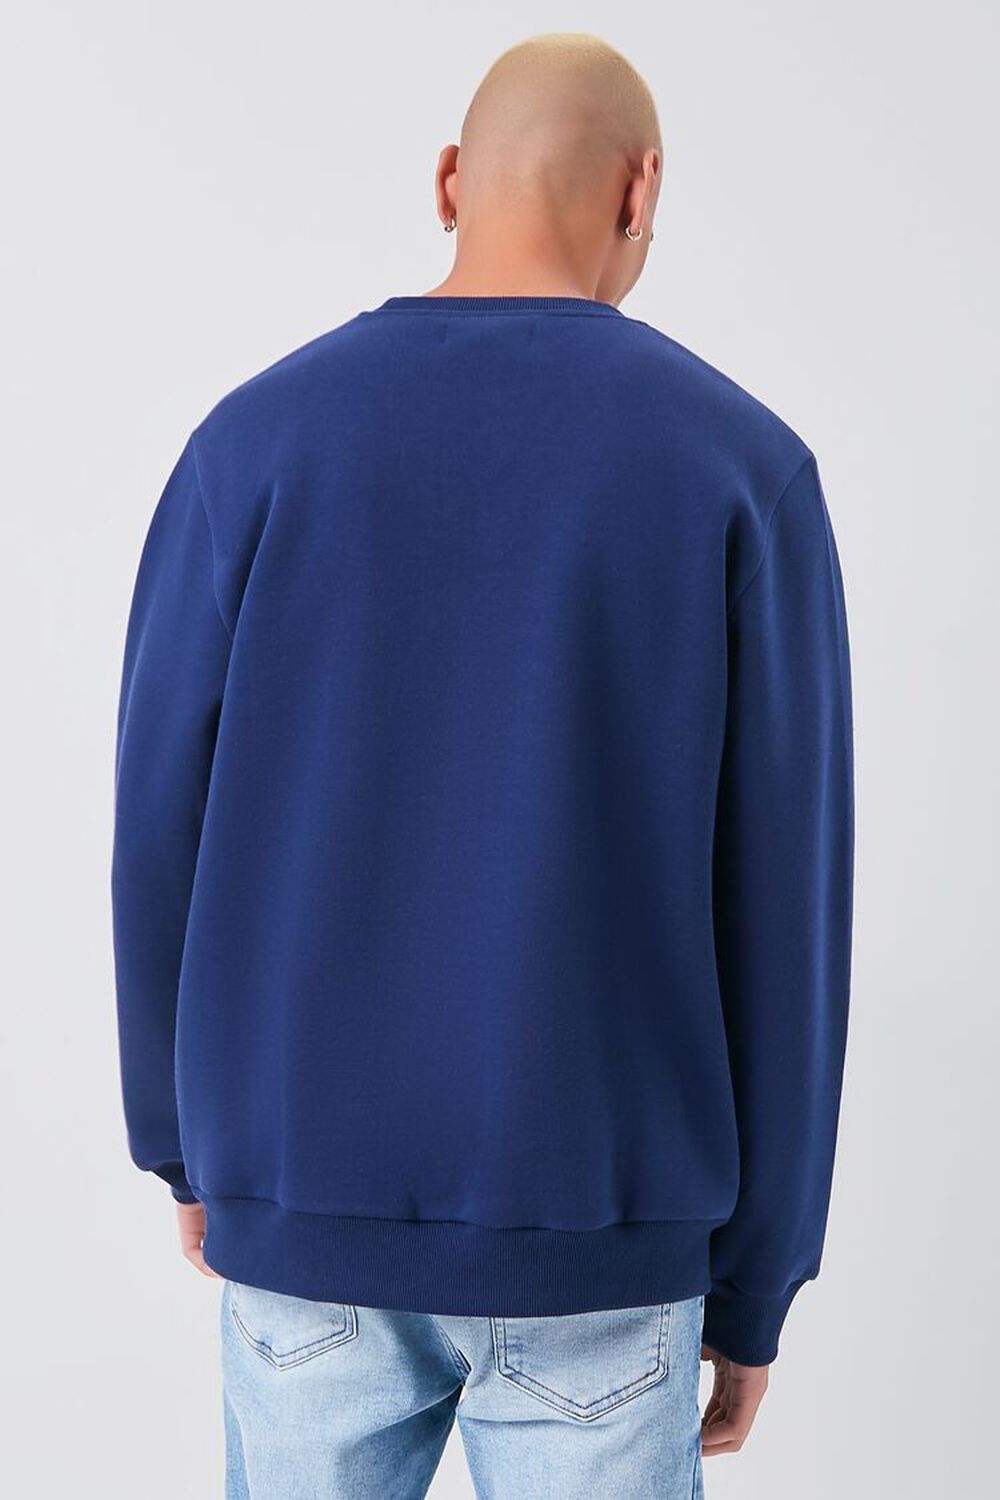 BLUE Basic Drop-Sleeve Sweatshirt, image 3